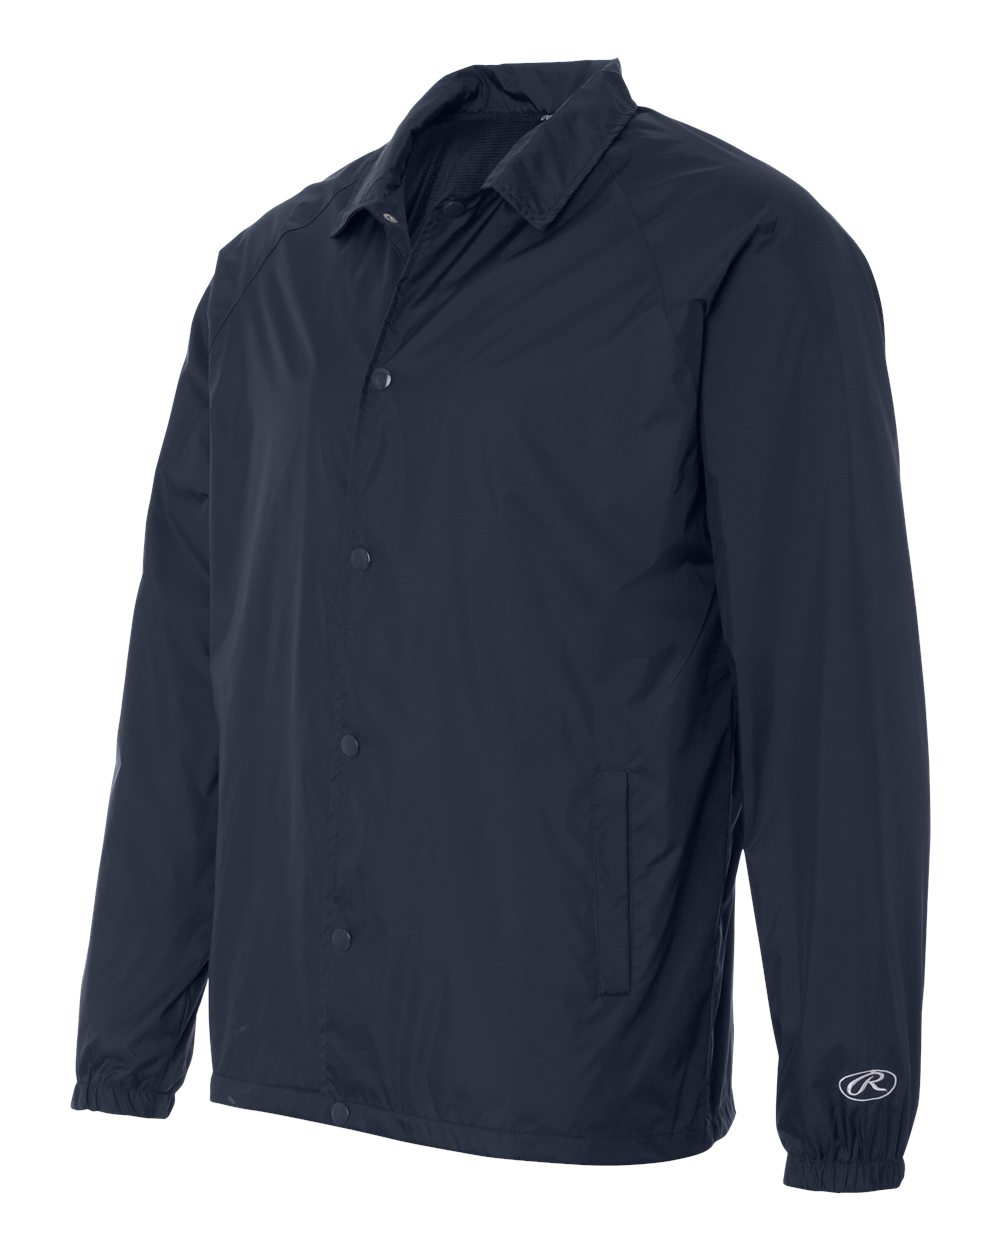 Rawlings 9718 - Nylon Coach's Jacket